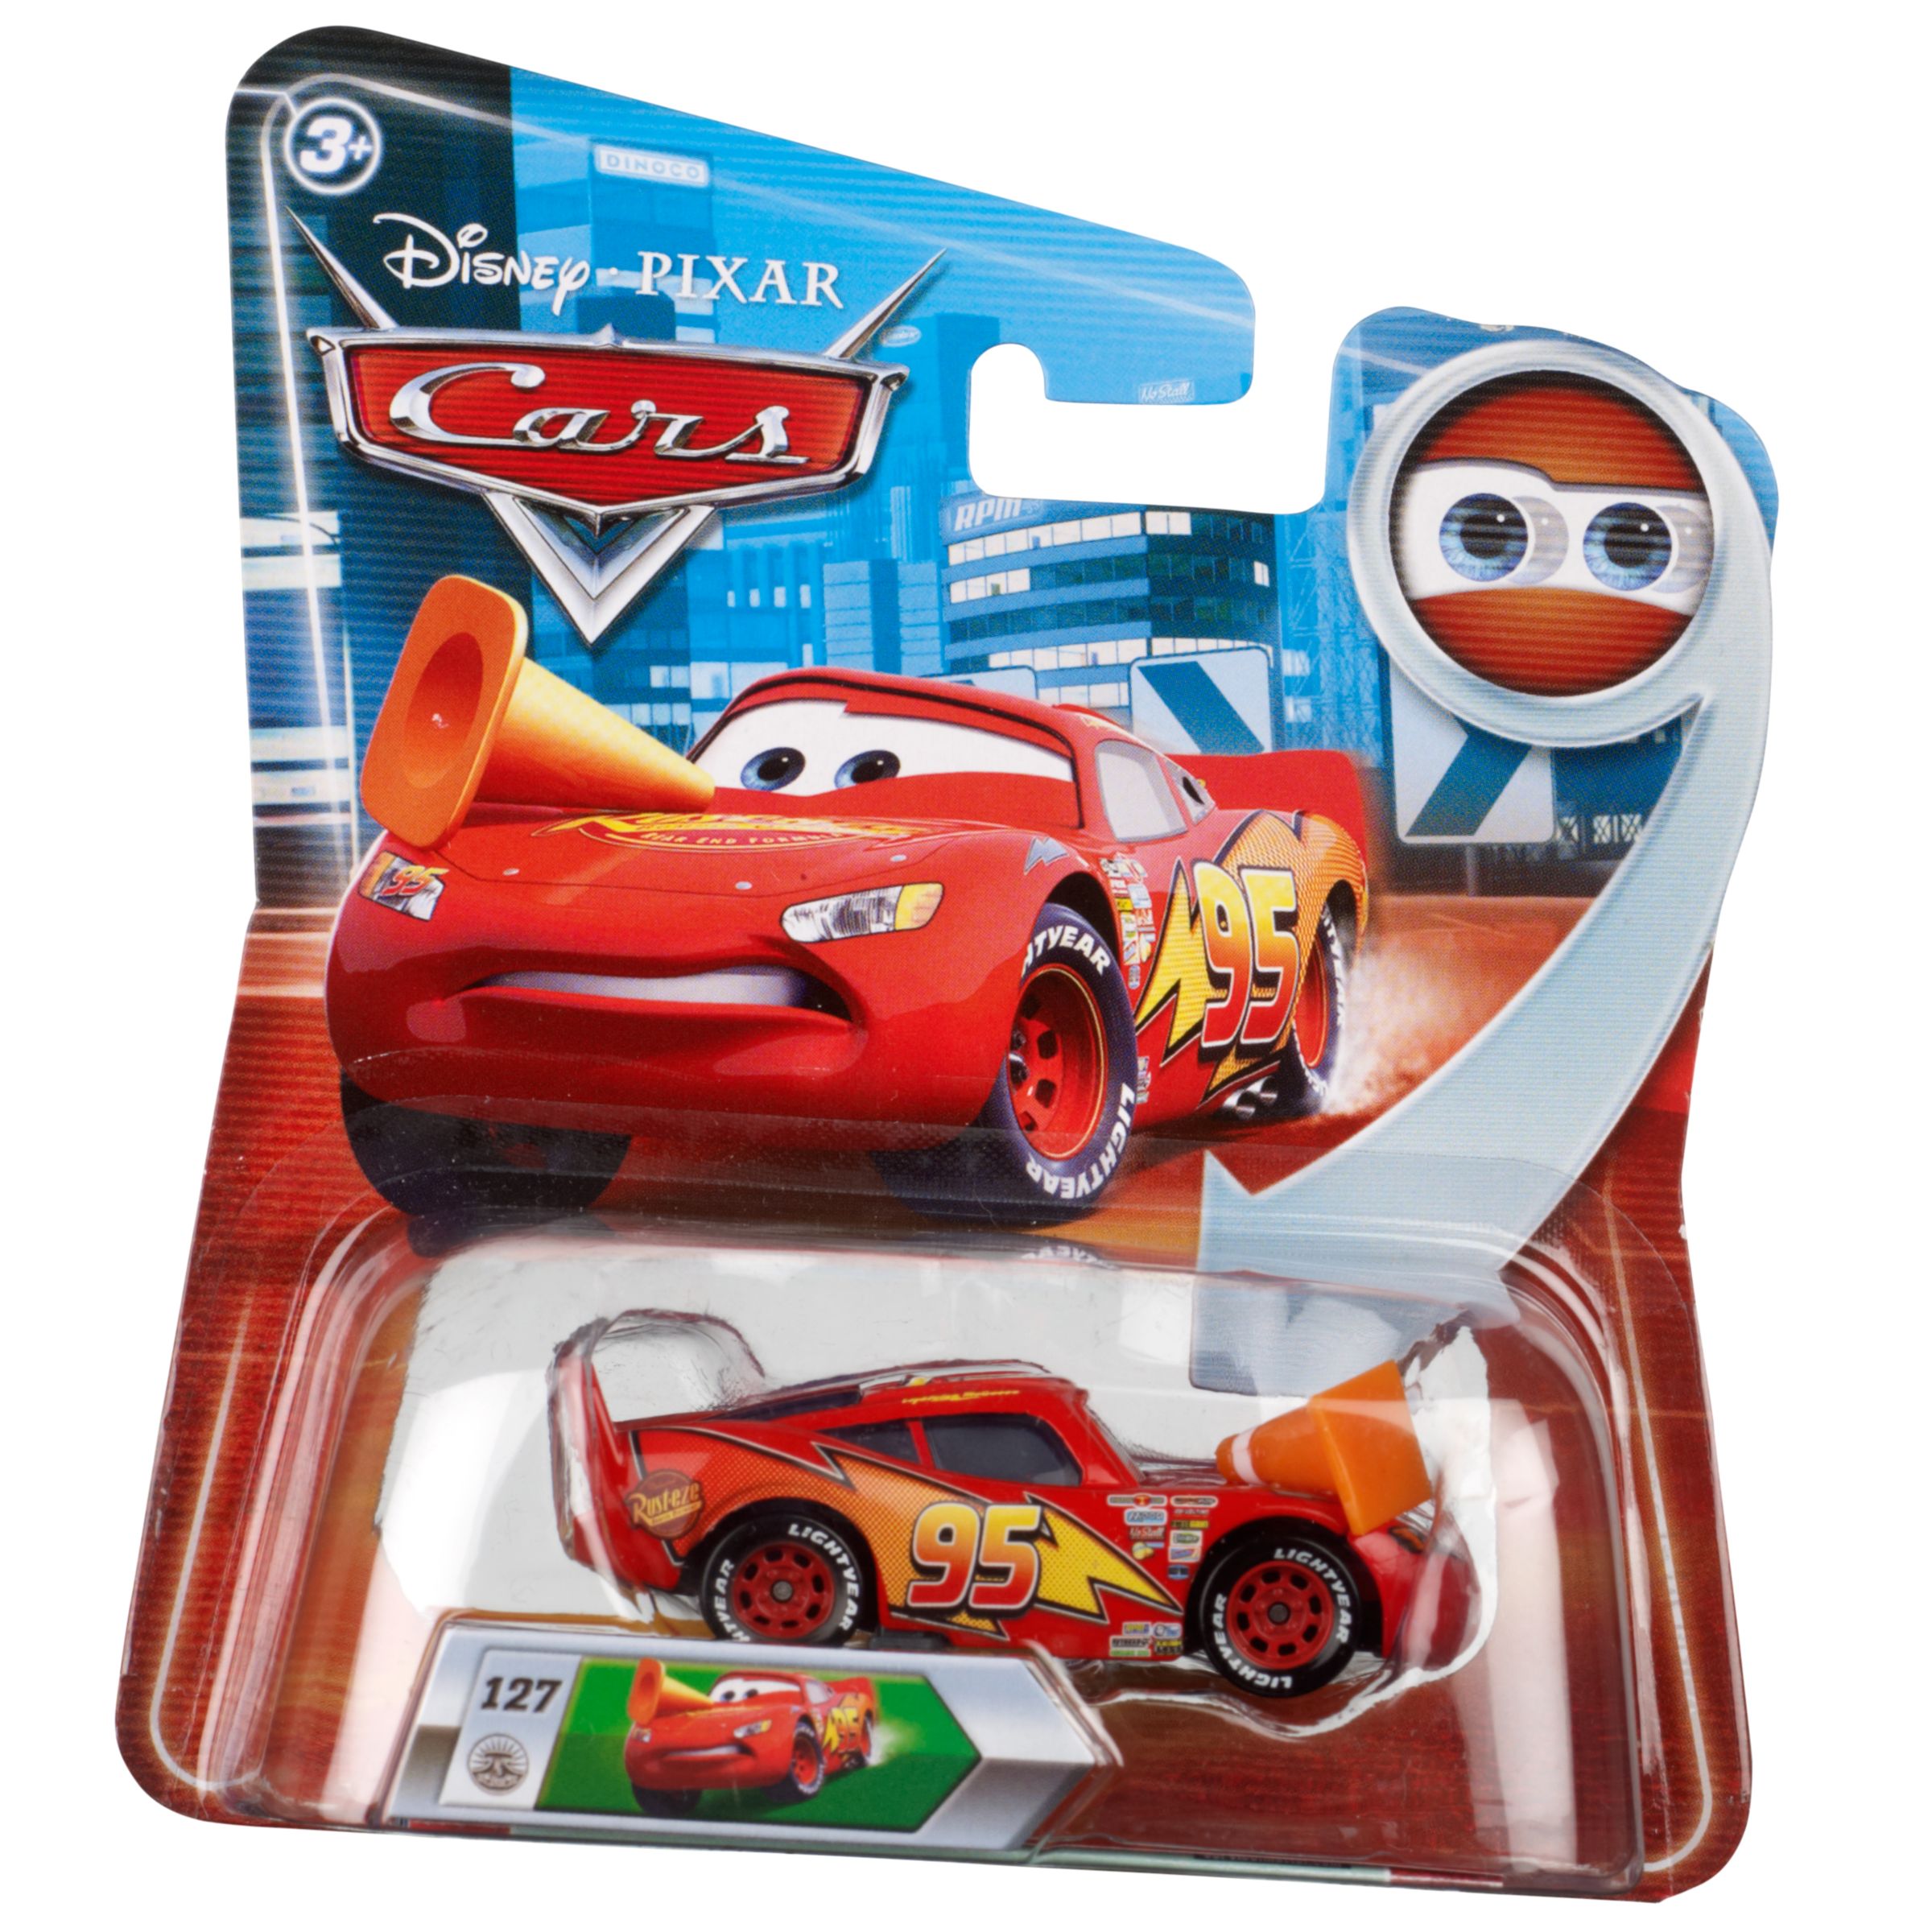 disney pixar cars characters pictures. Disney Pixar Cars: Character